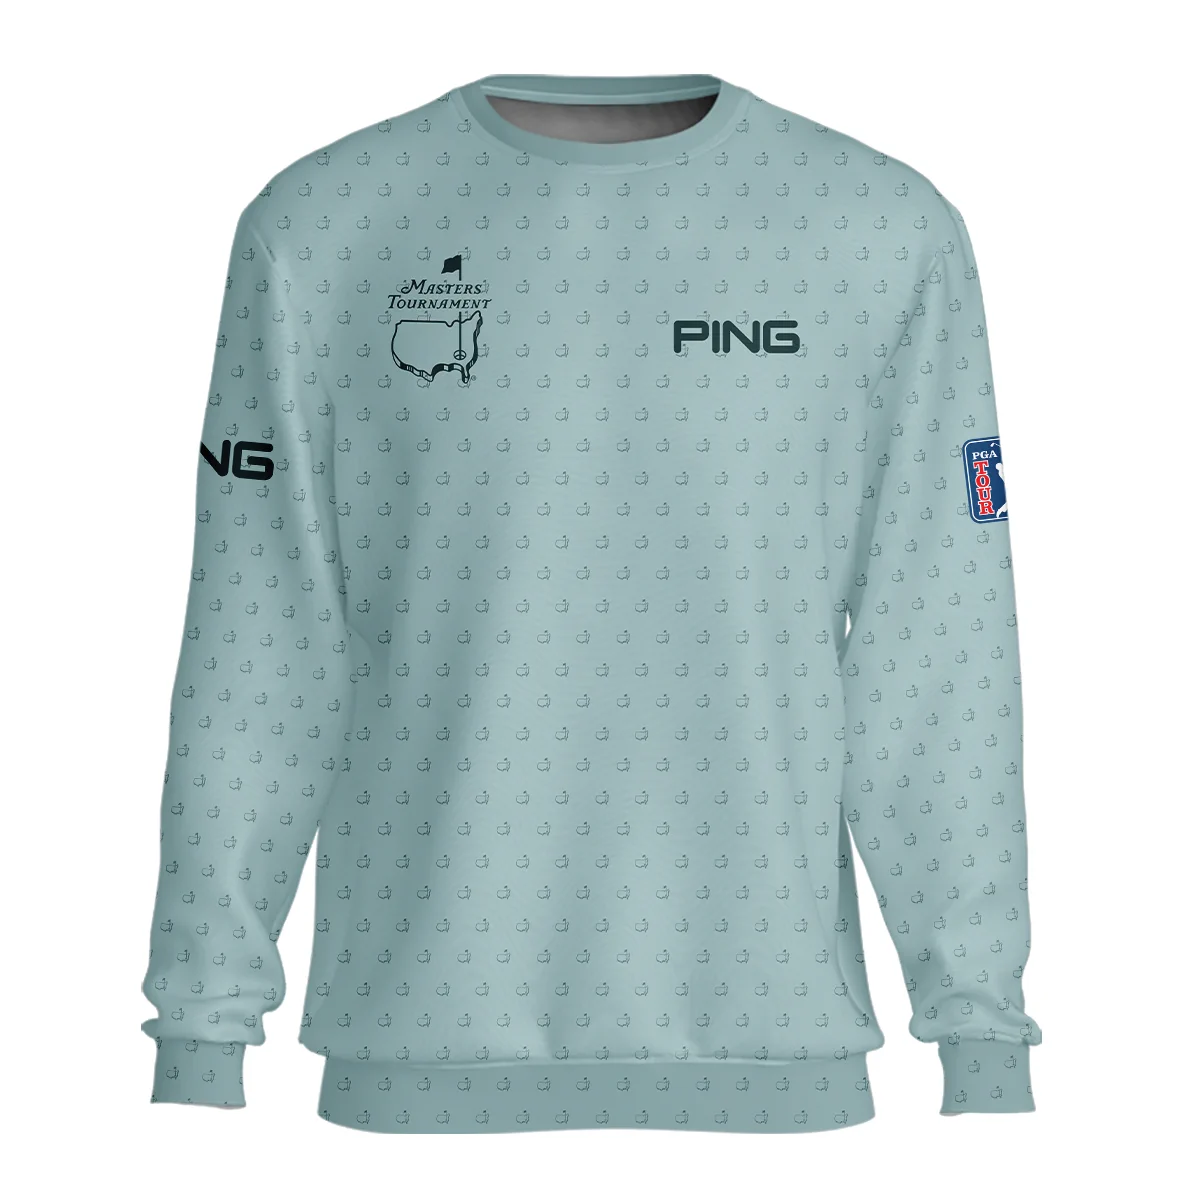 Golf Pattern Masters Tournament Ping Unisex Sweatshirt Cyan Pattern All Over Print Sweatshirt